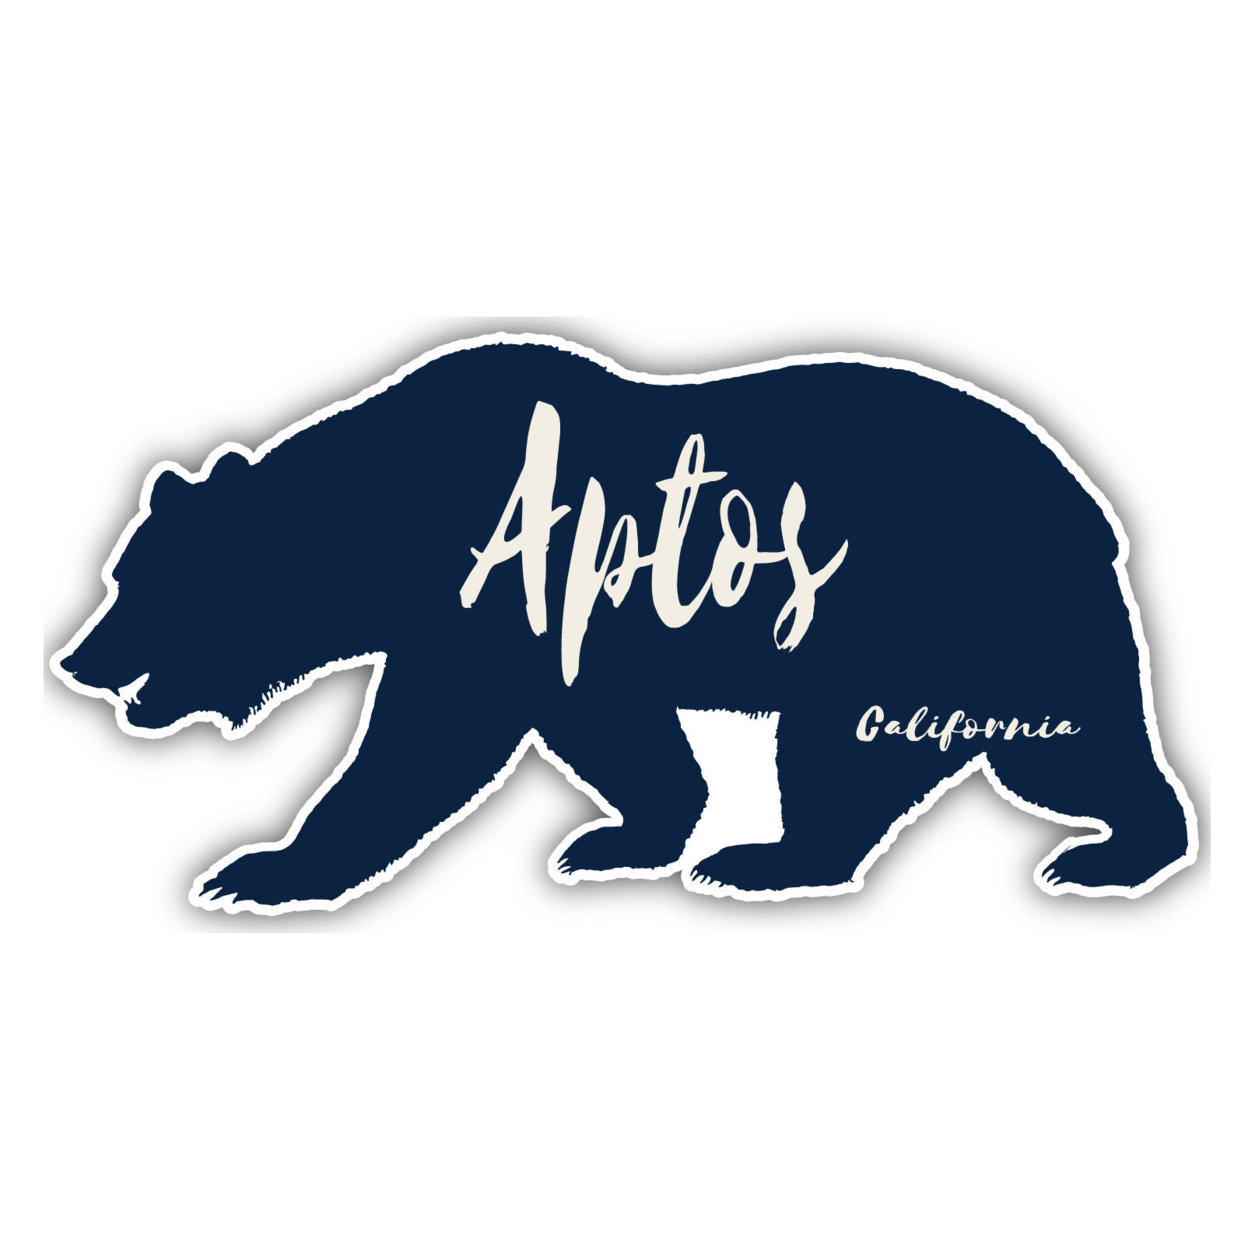 Aptos California Souvenir Decorative Stickers (Choose Theme And Size) - 4-Pack, 10-Inch, Adventures Awaits